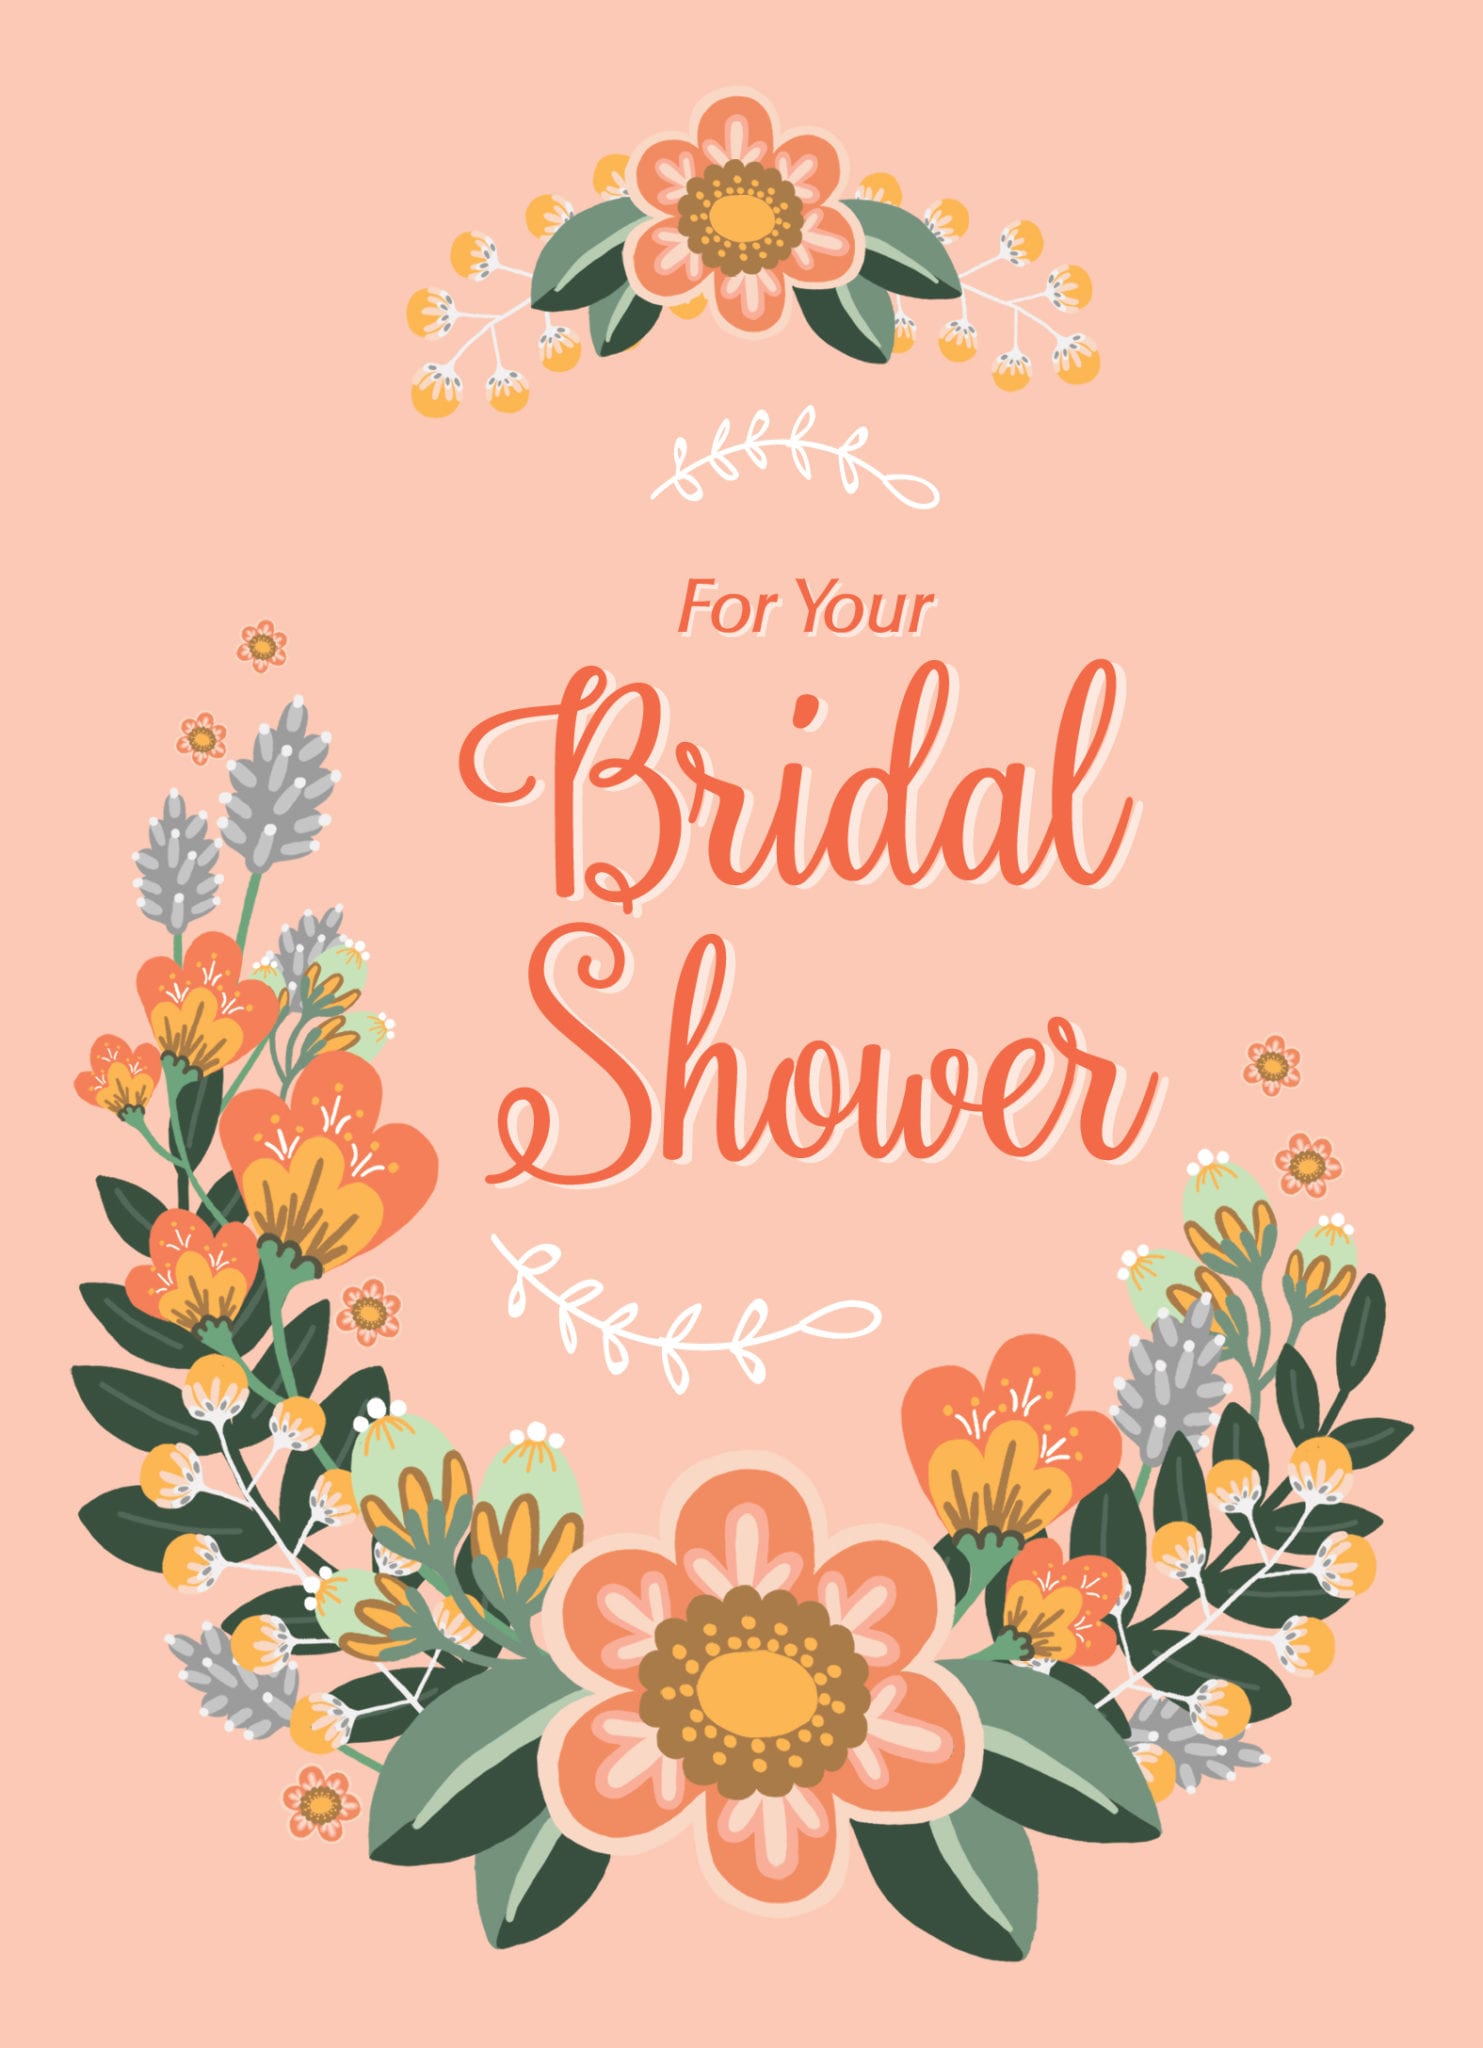 bridal-shower-card-messages-ideas-best-home-design-ideas